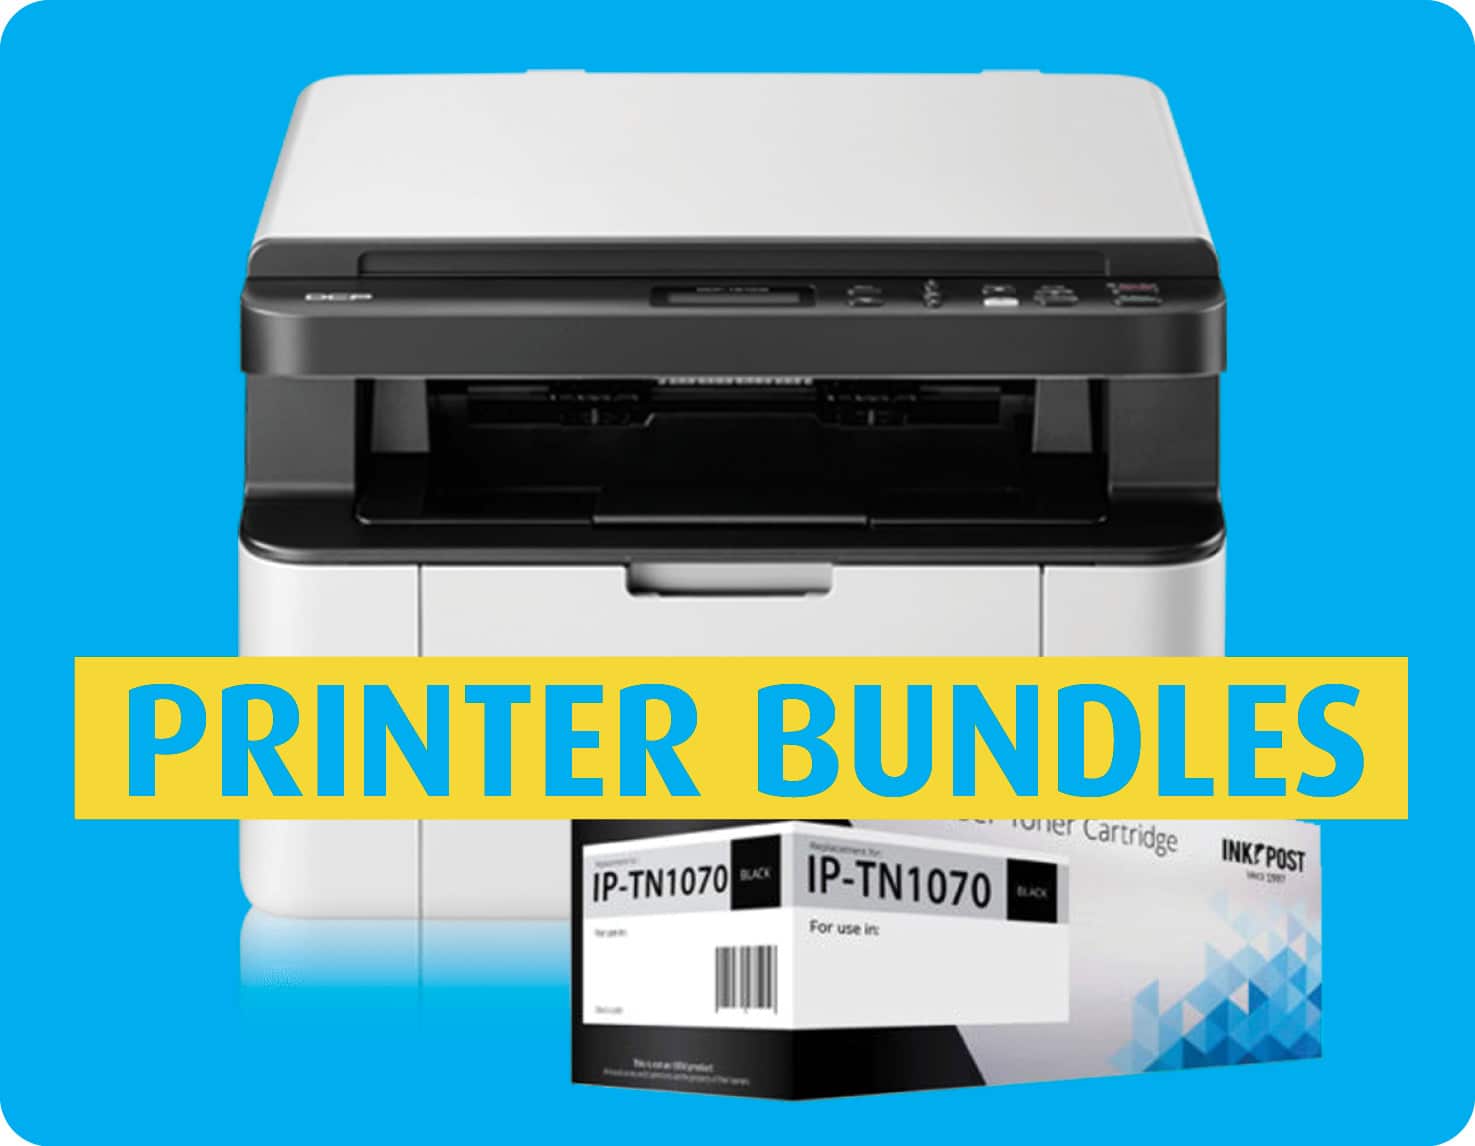 printer bundles